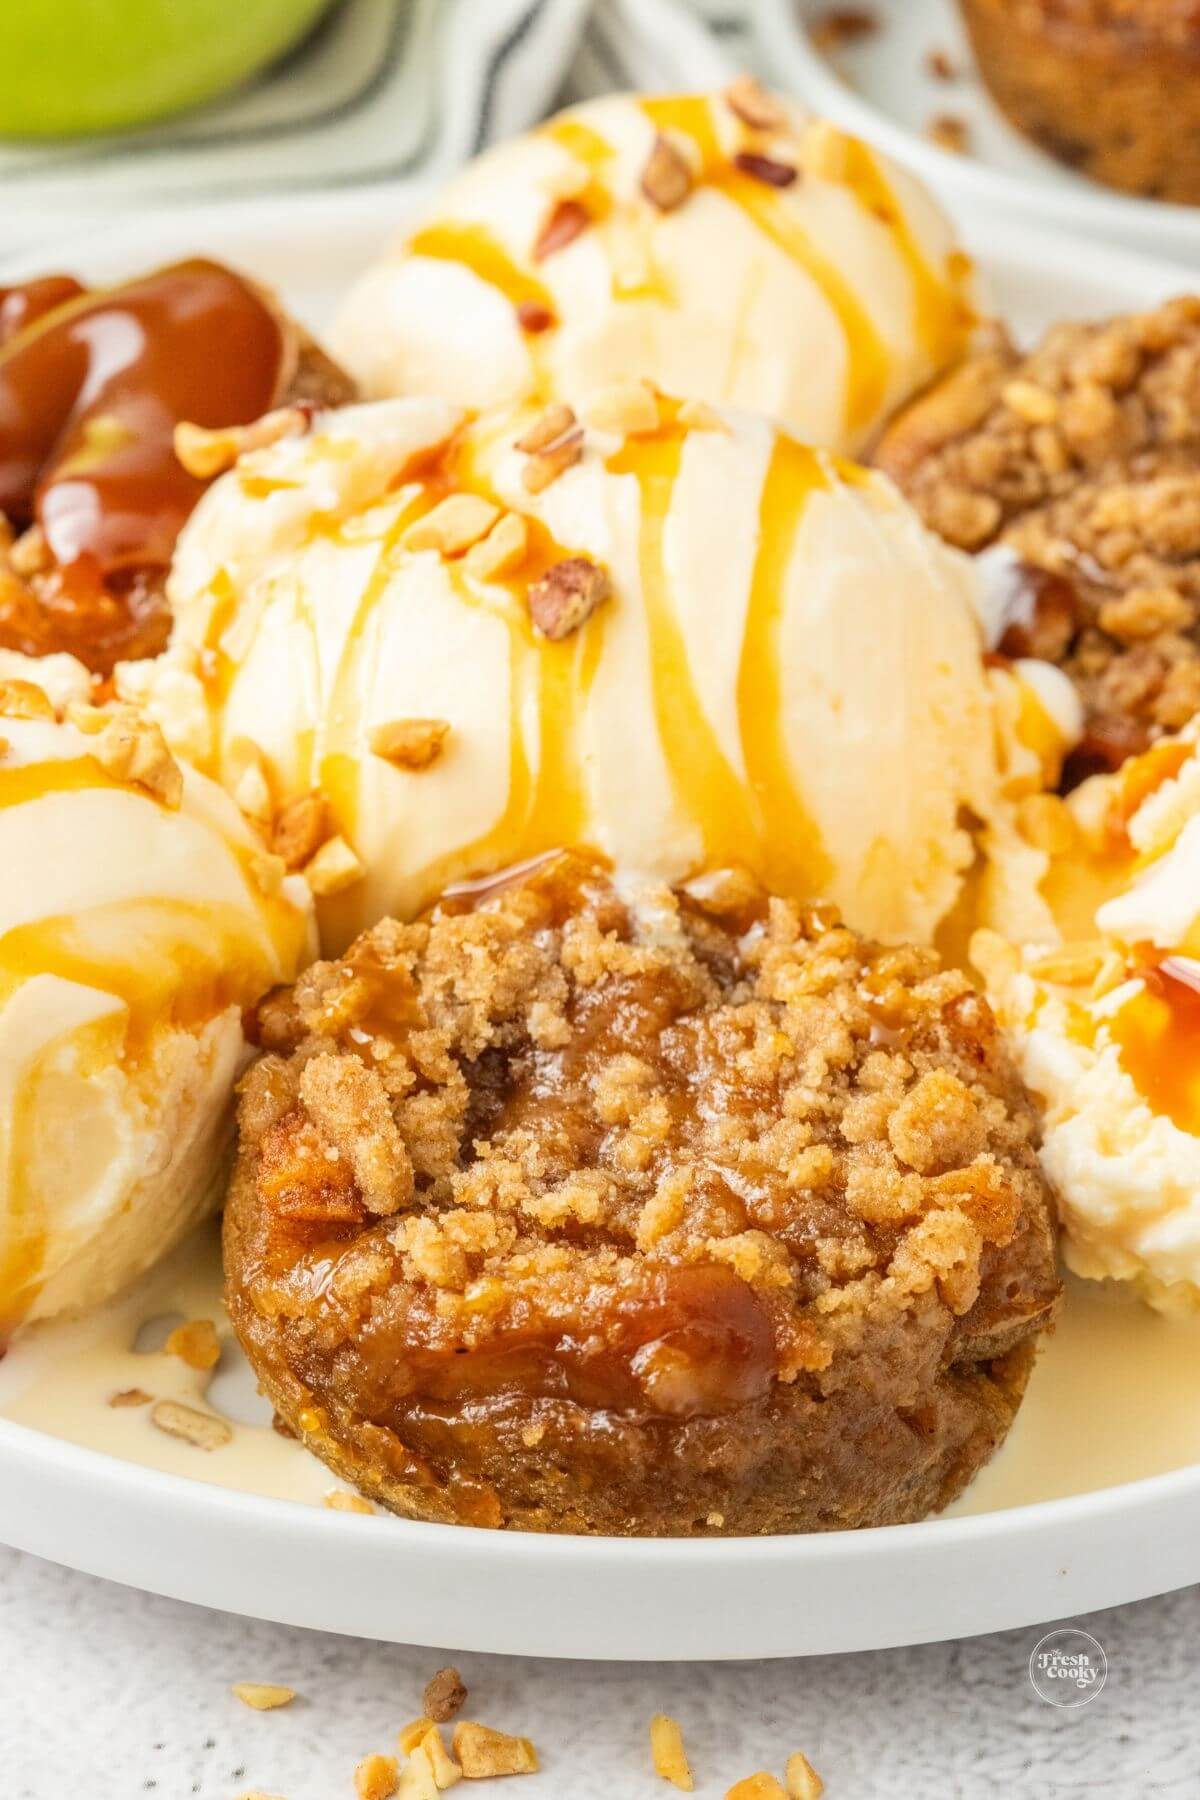 Mini apple pie recipe on plate with vanilla ice cream, ready to serve.